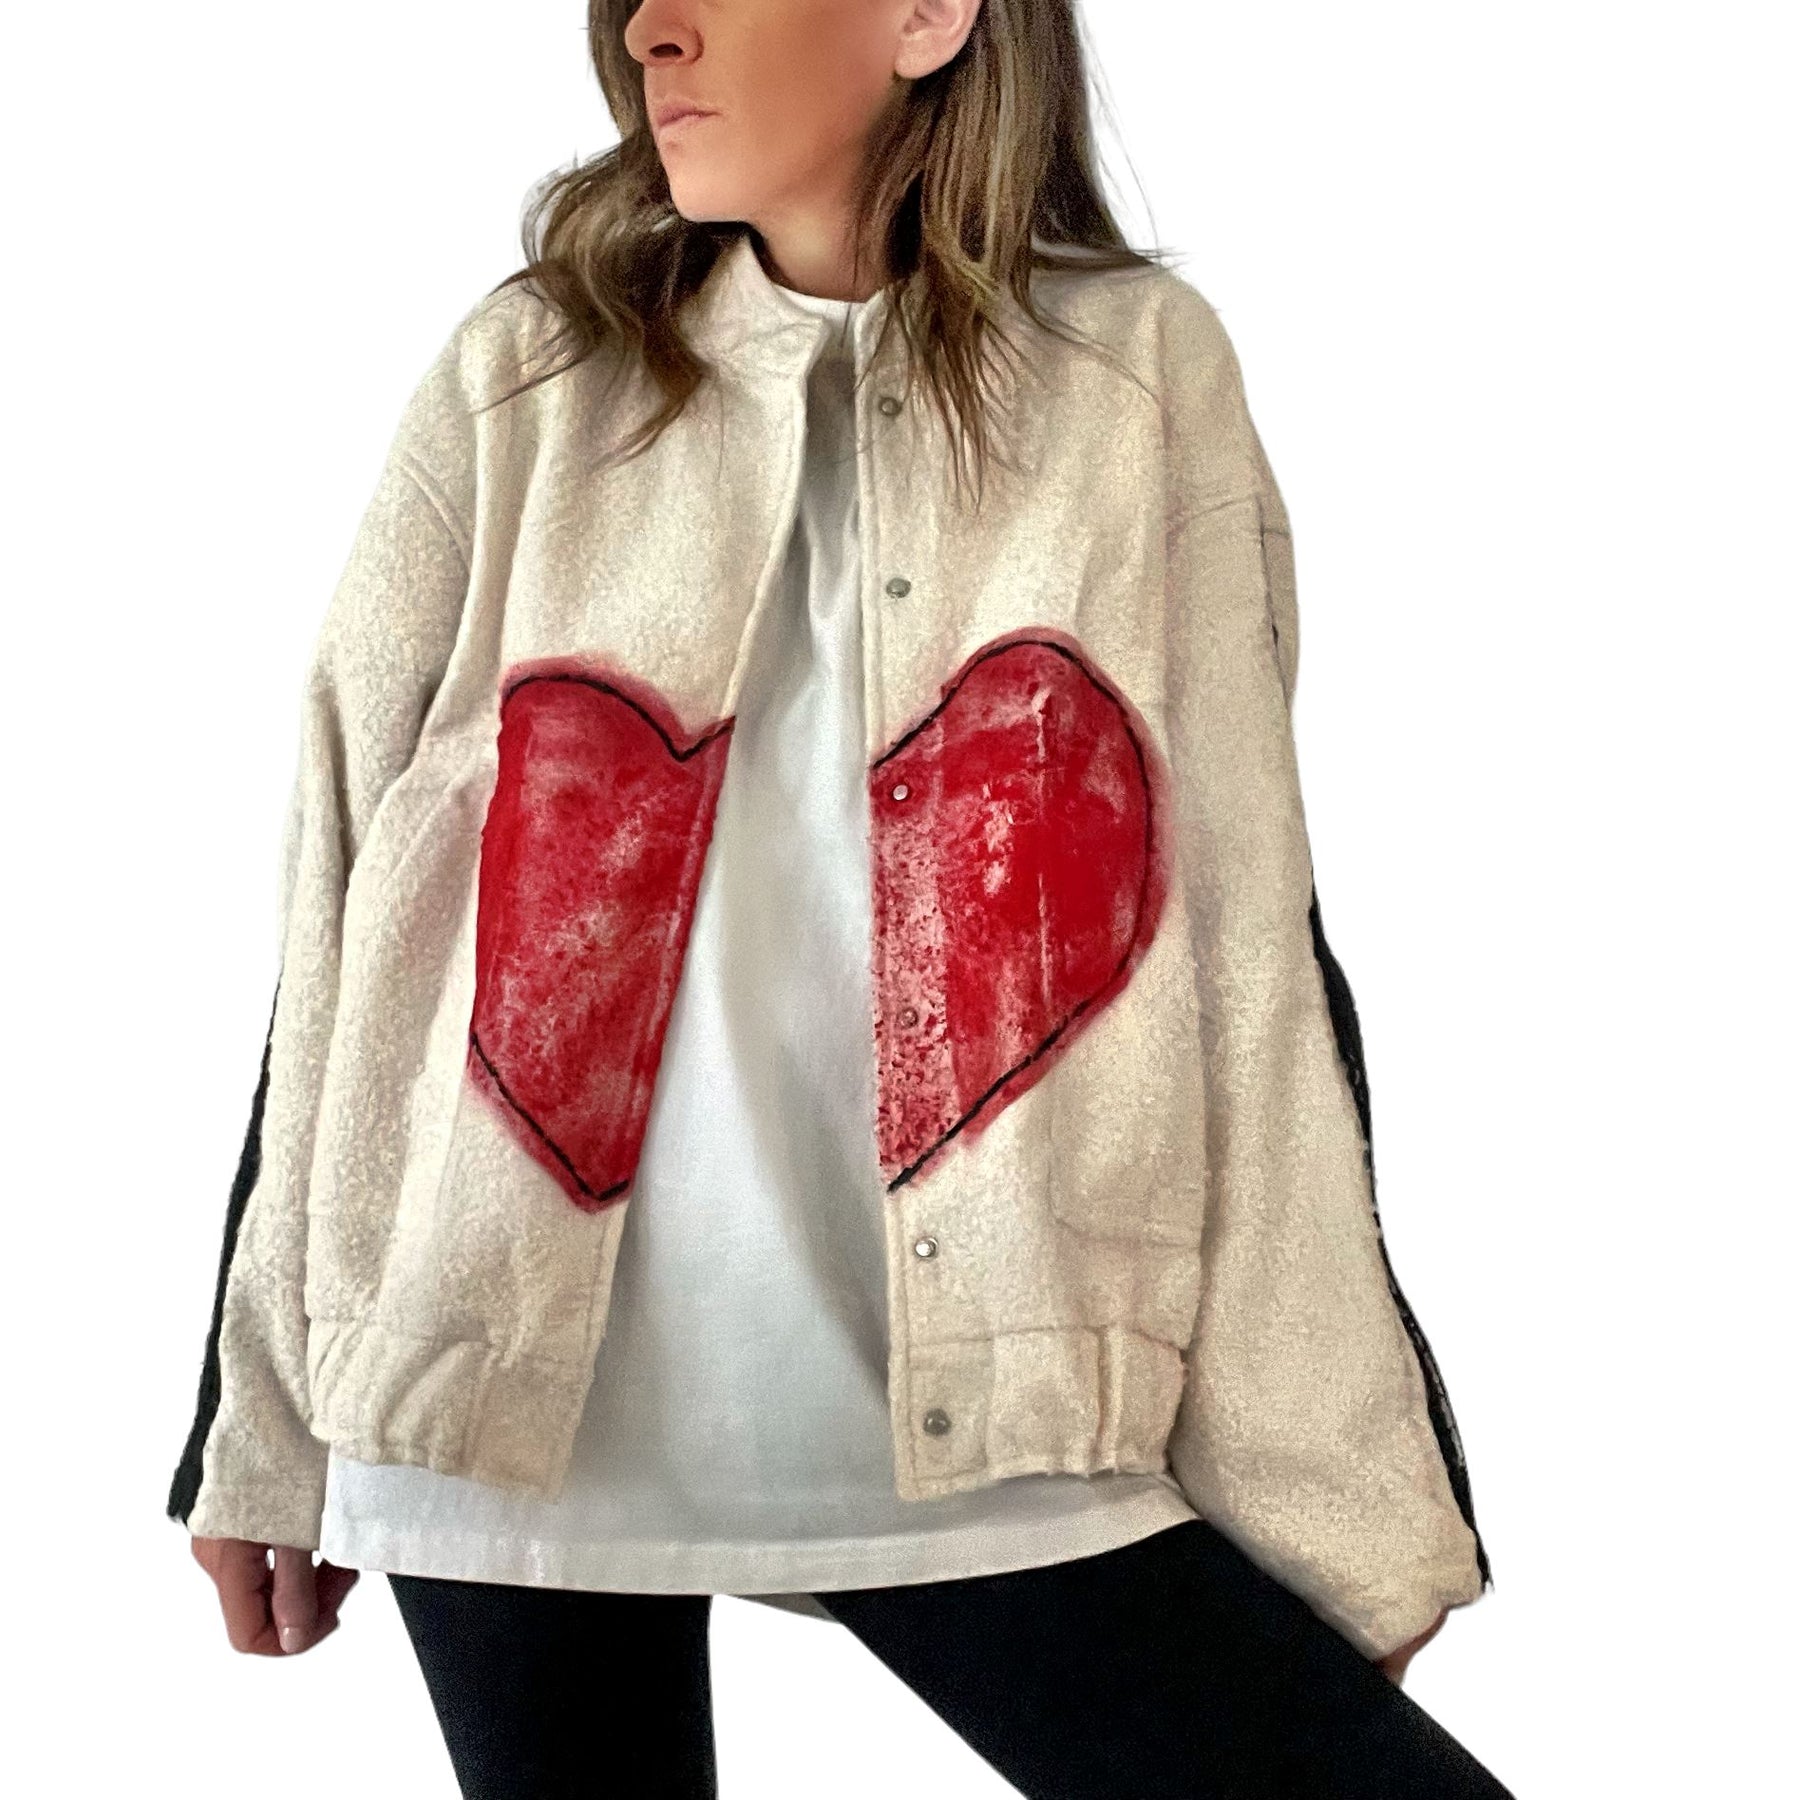 'Kind Heart' Painted Jacket